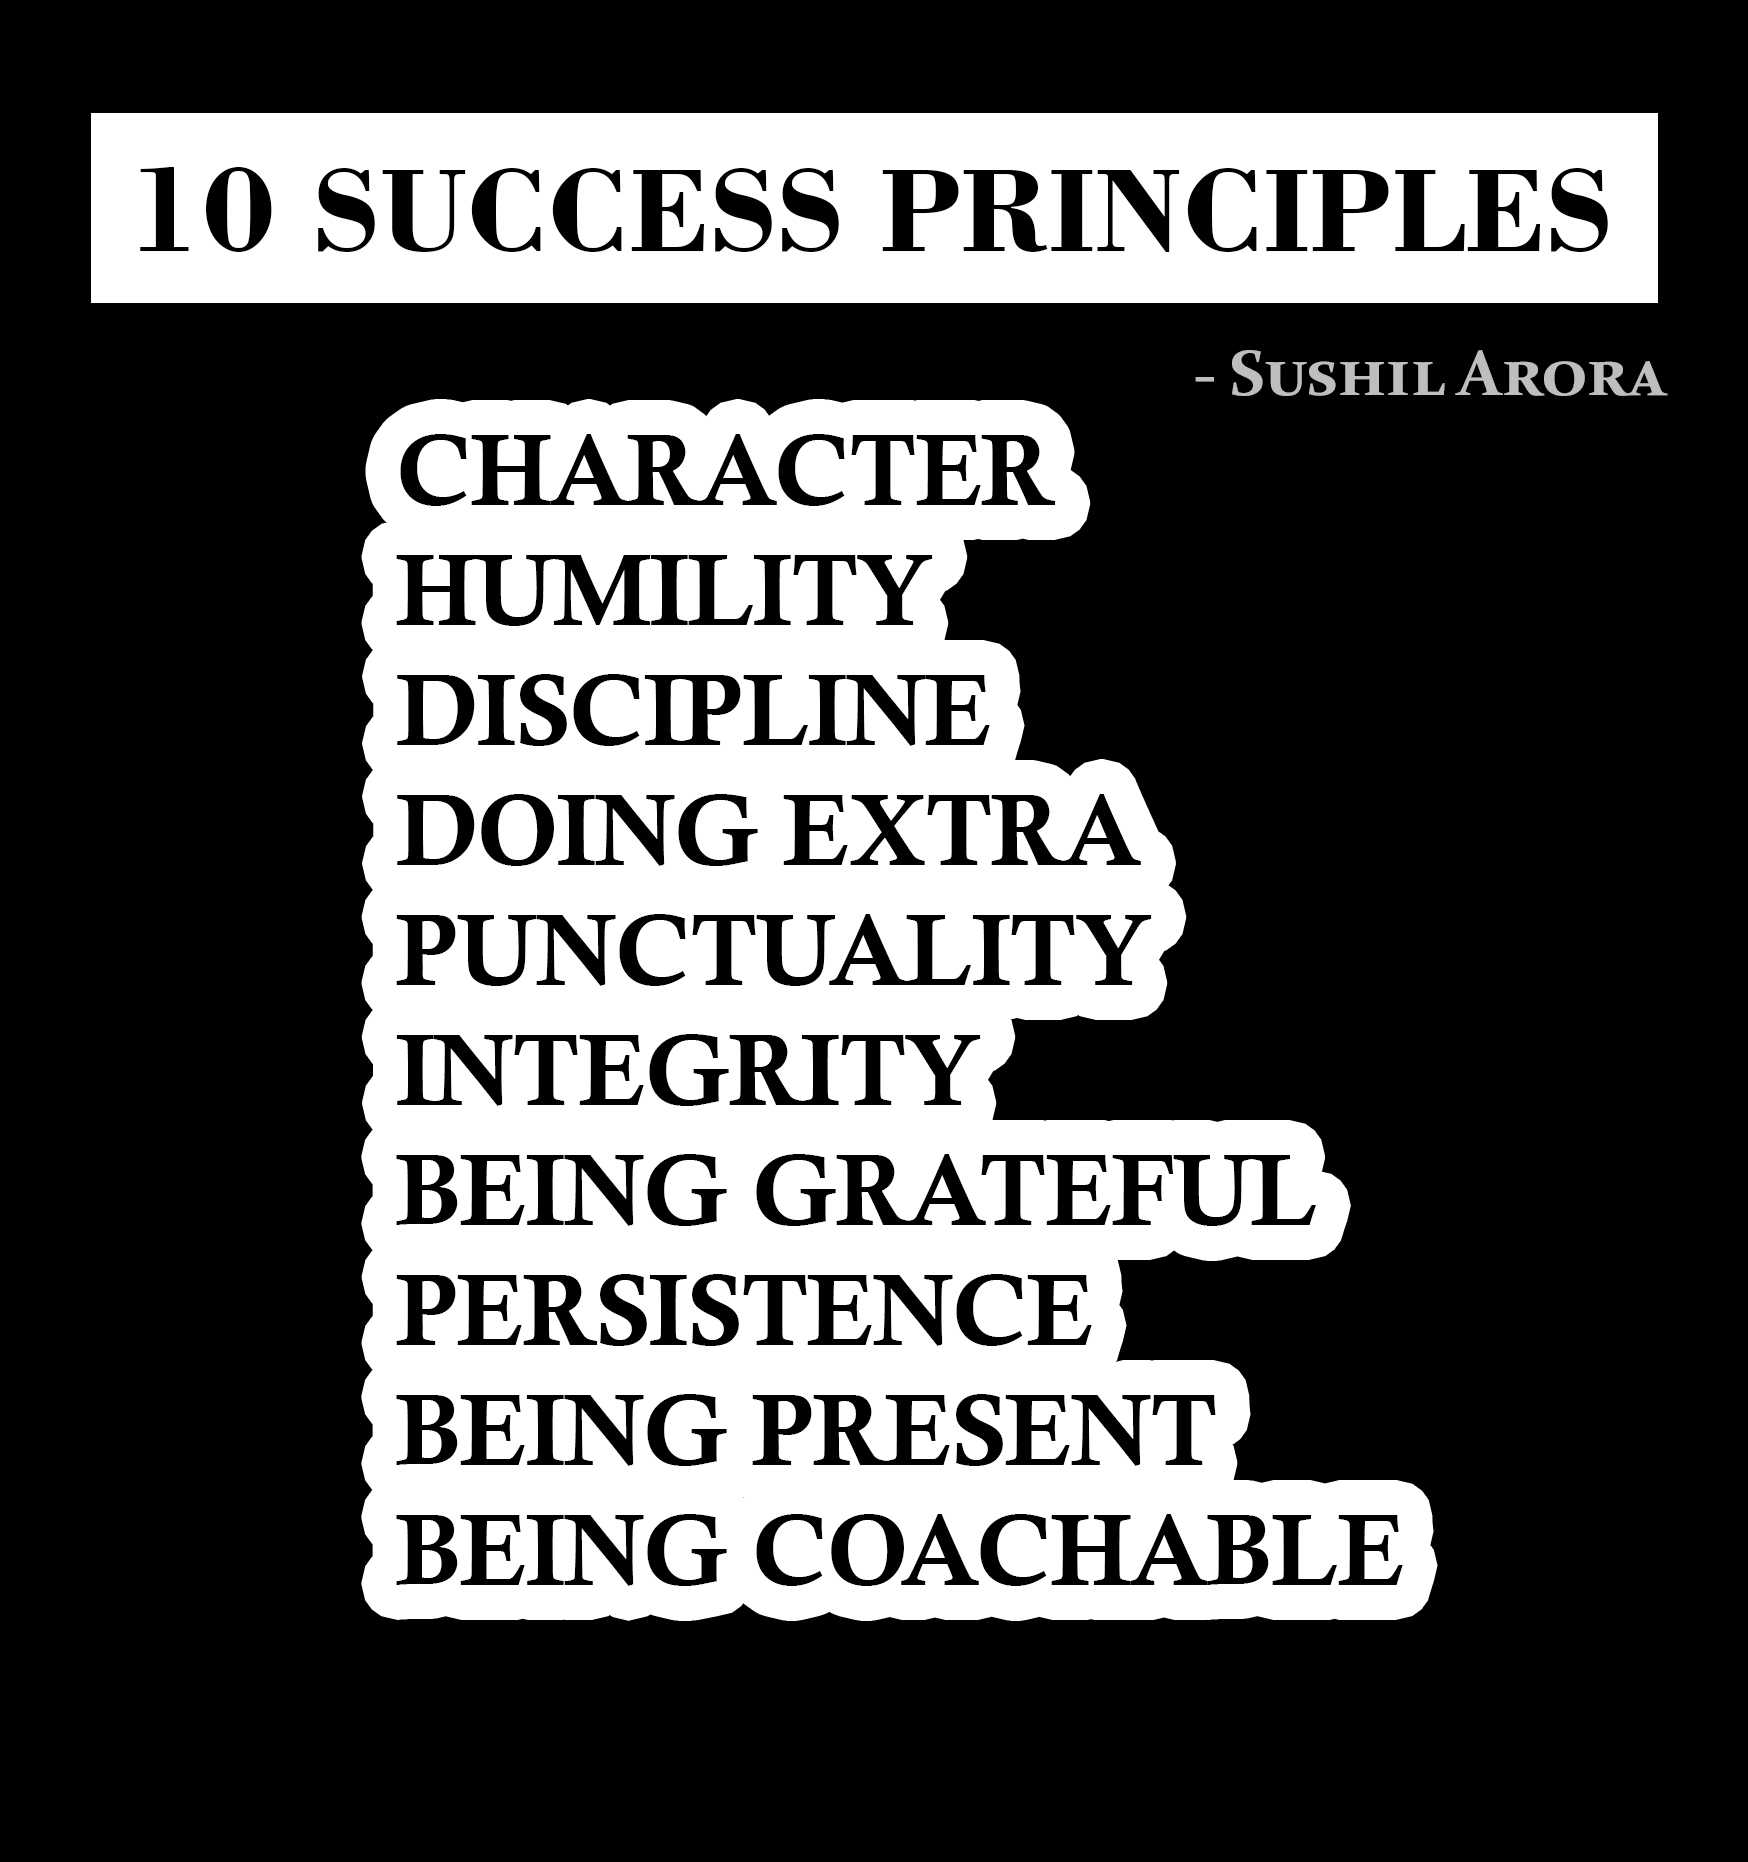 10 Success principles